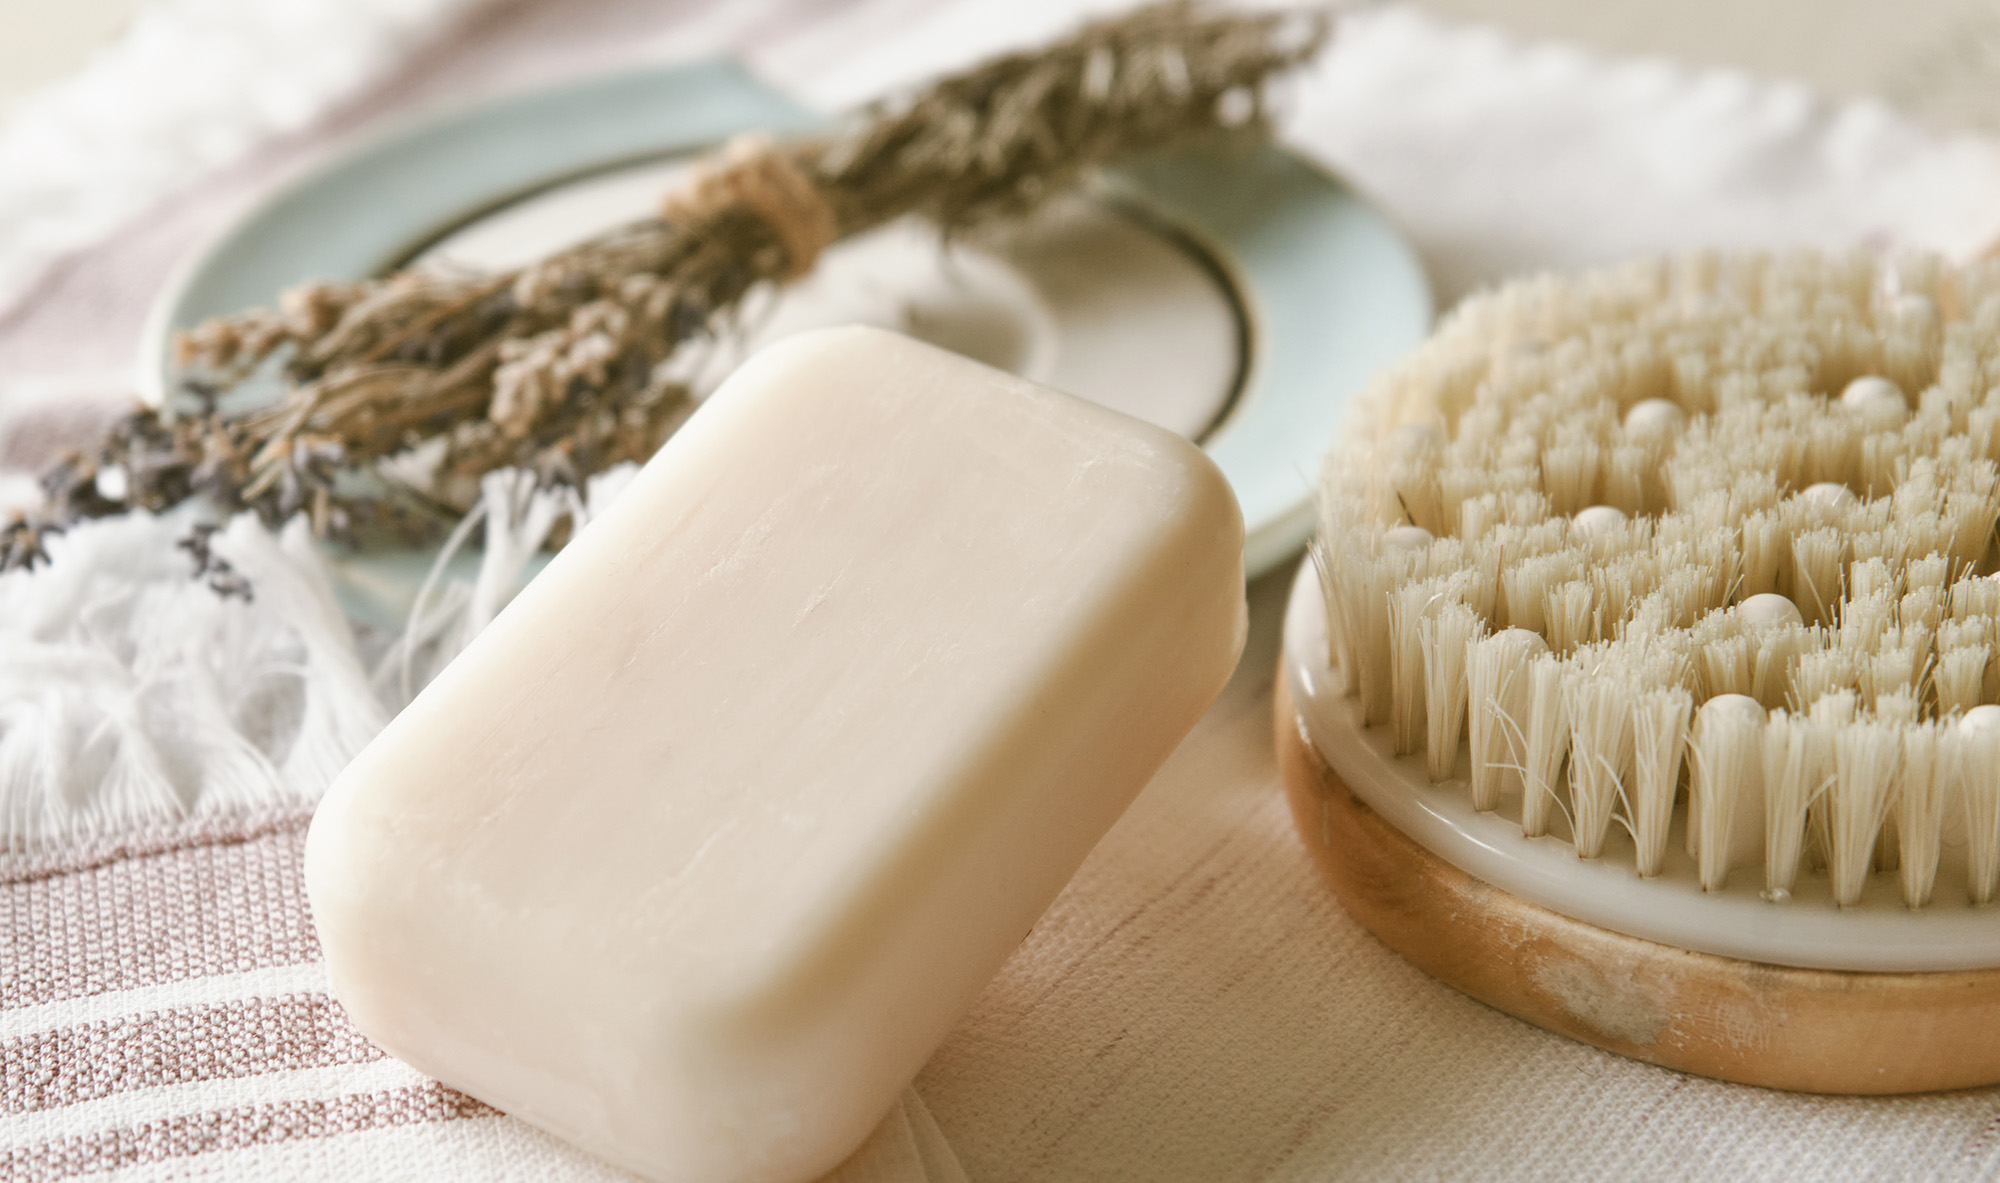 Handmade organic white soap with body brush and aroma herbs